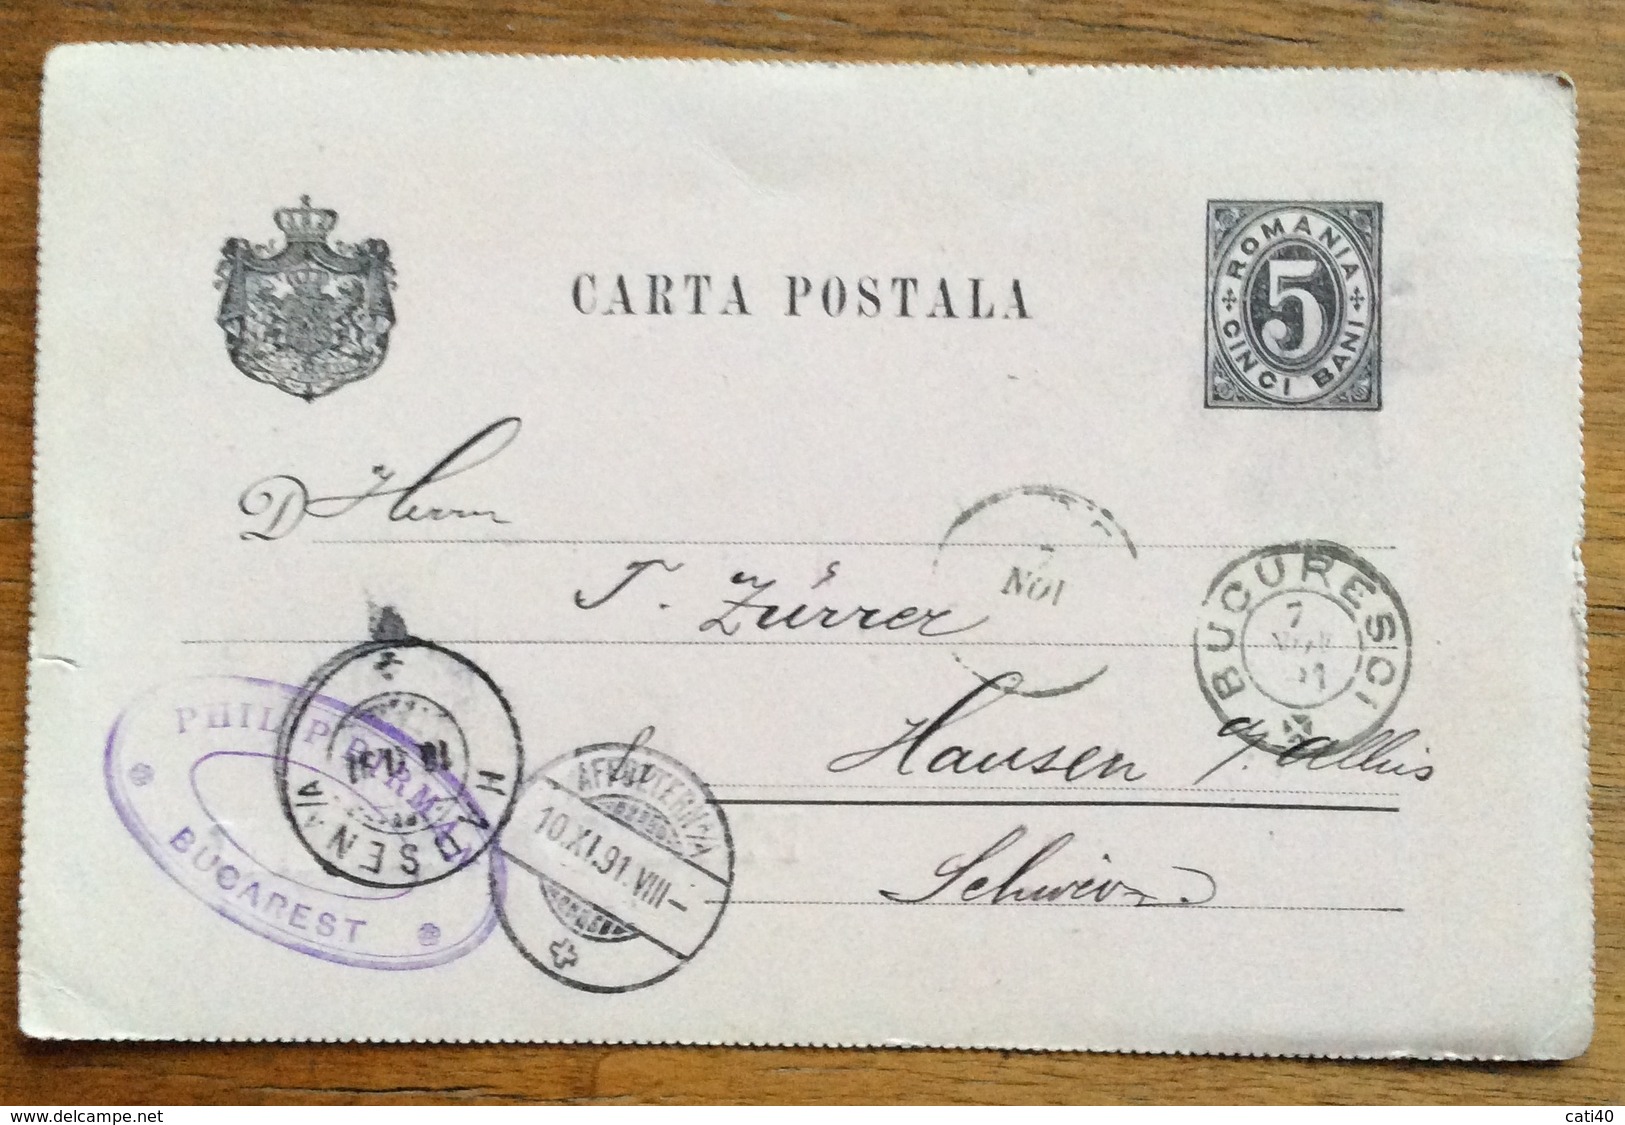 ROMANIA  CARTA POSTALE POST CARD  5 Bani  FROM BUCUREȘCI  7/11/1891  TO HAUSEN SUISSE - Lithuania